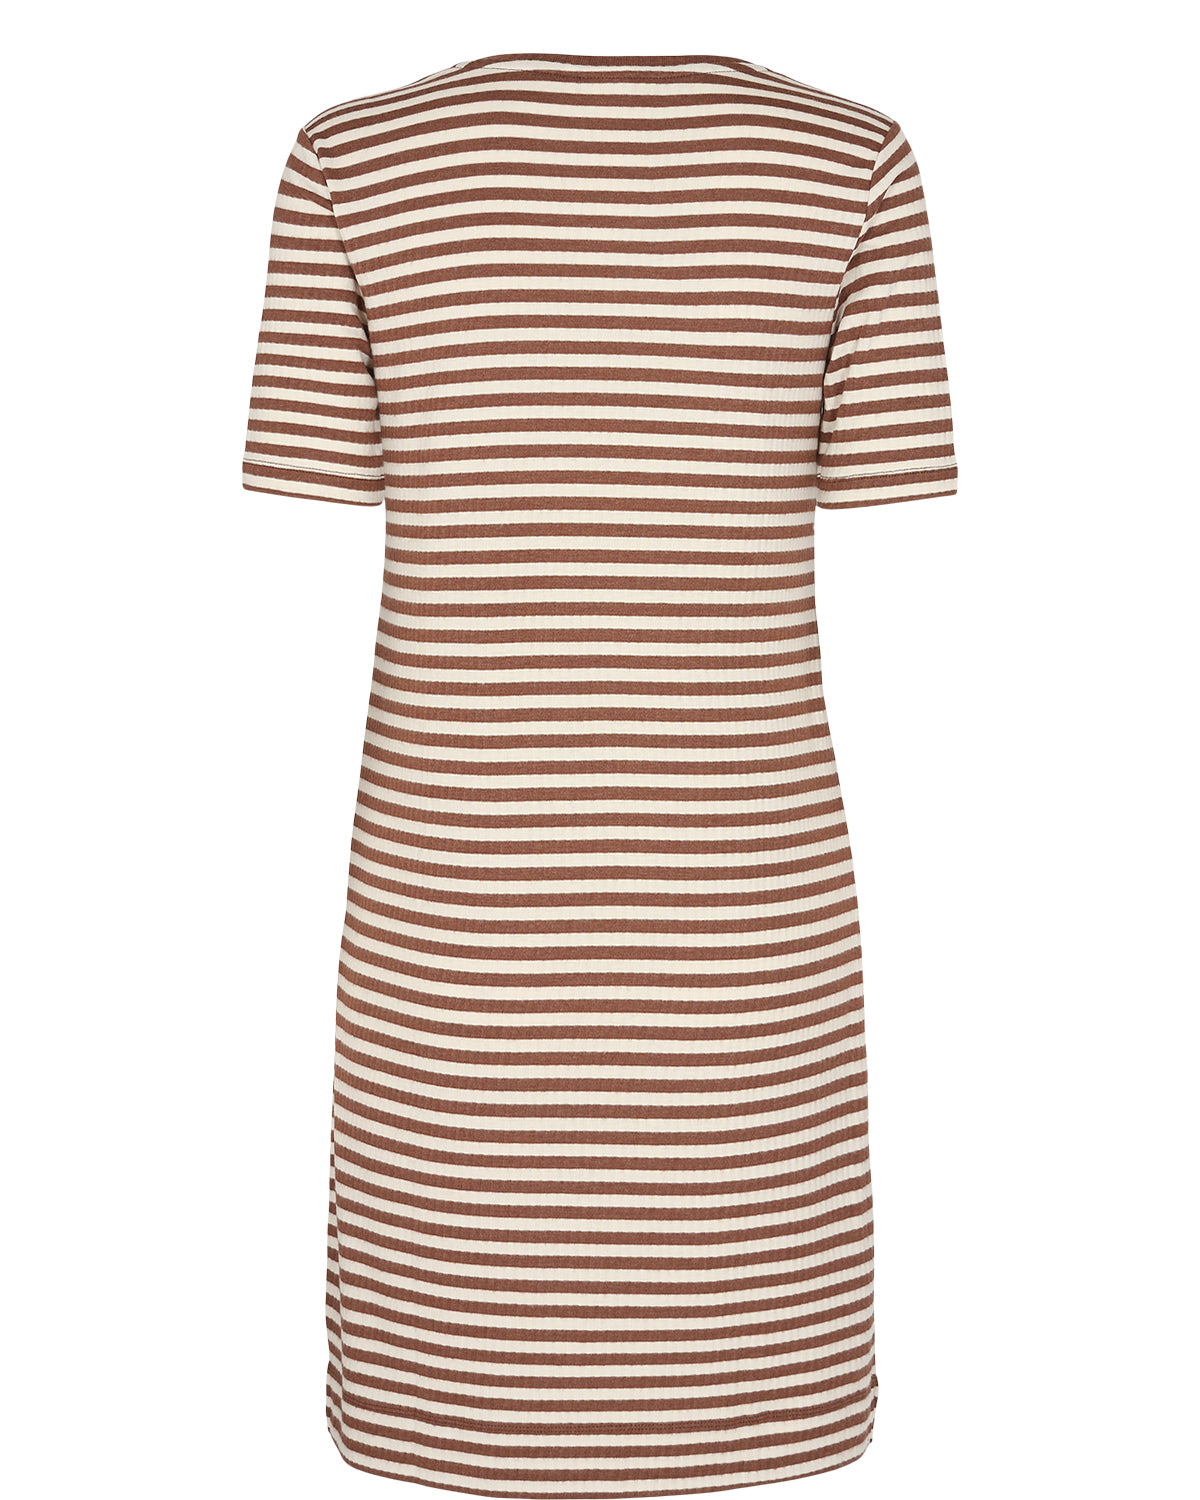 Numph Tania T-shirt Dress - brown/cream